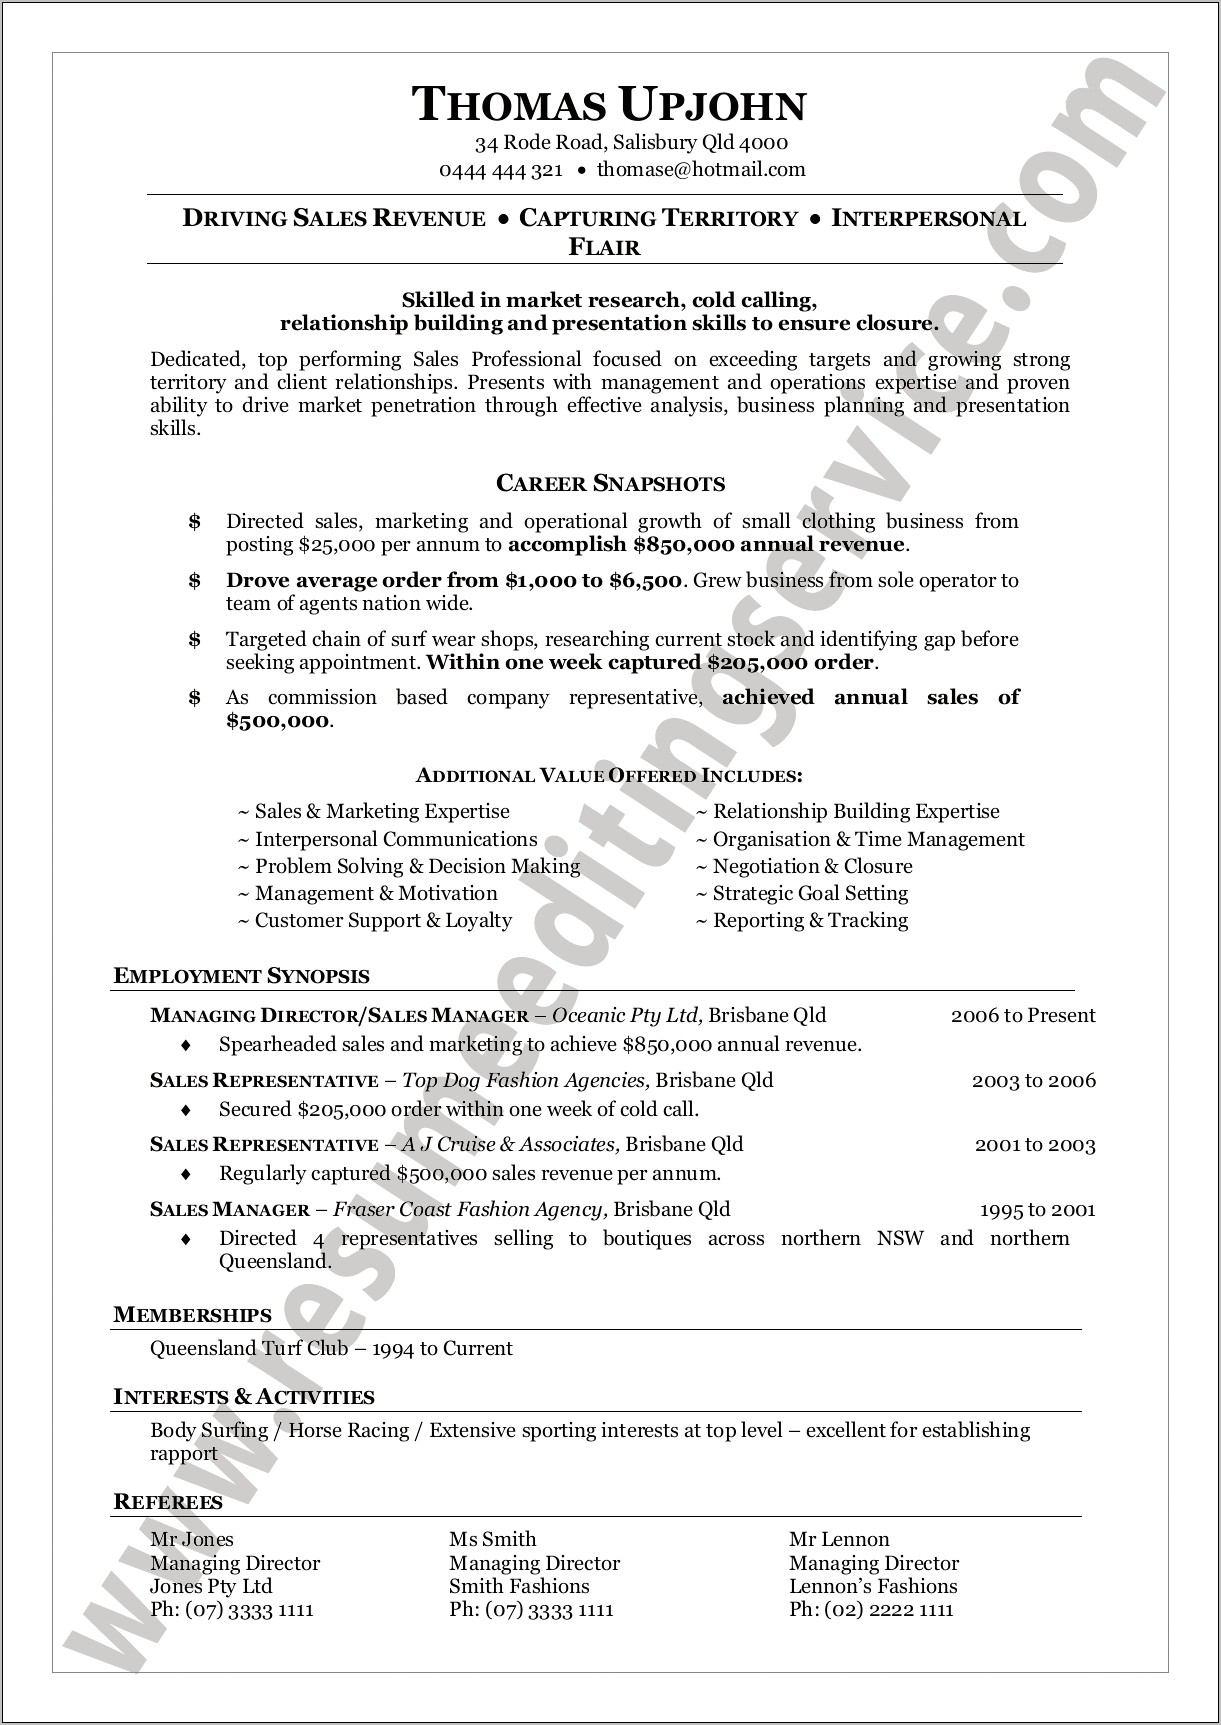 Sample Resume And Application Letter For Ojt